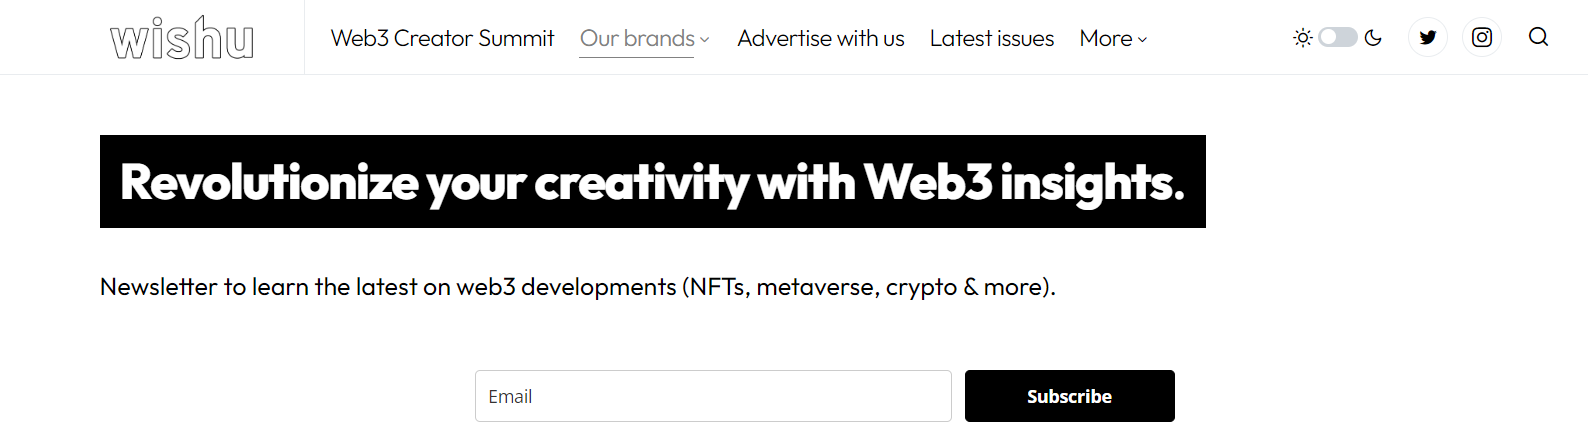 Web3 Creator Newsletter